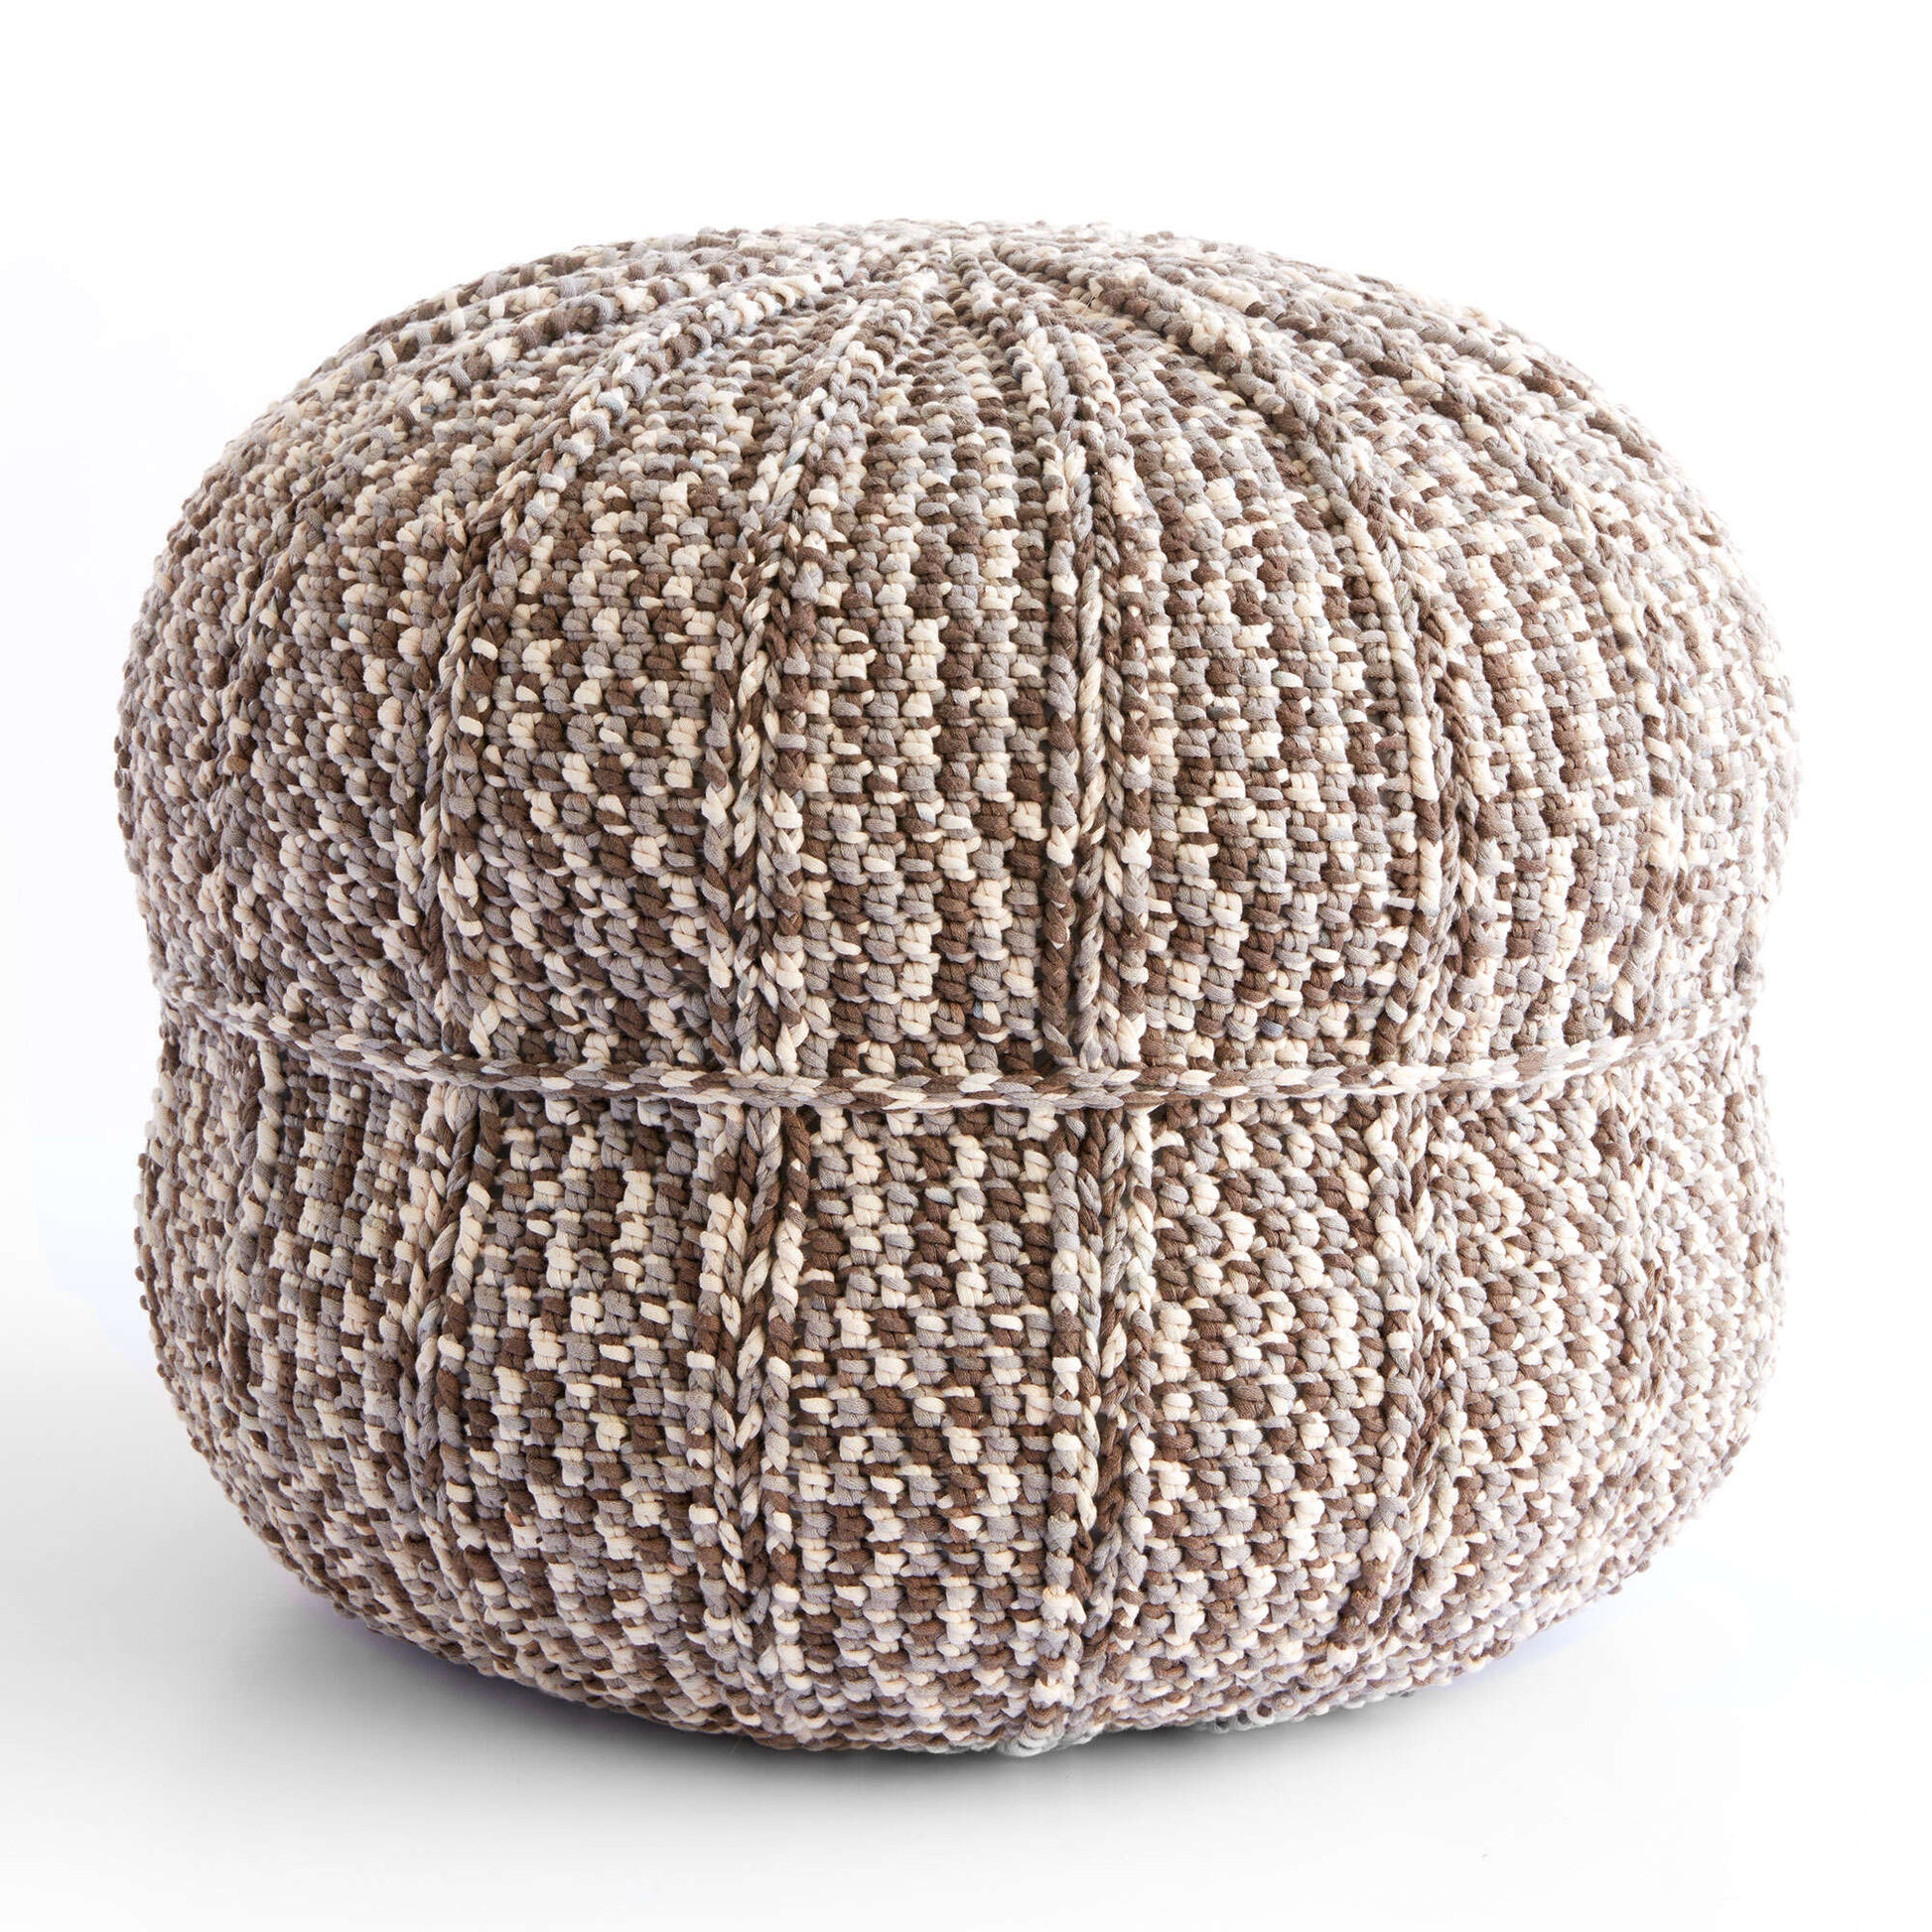 Bernat Wheel Spokes Crochet Pouf Single Size